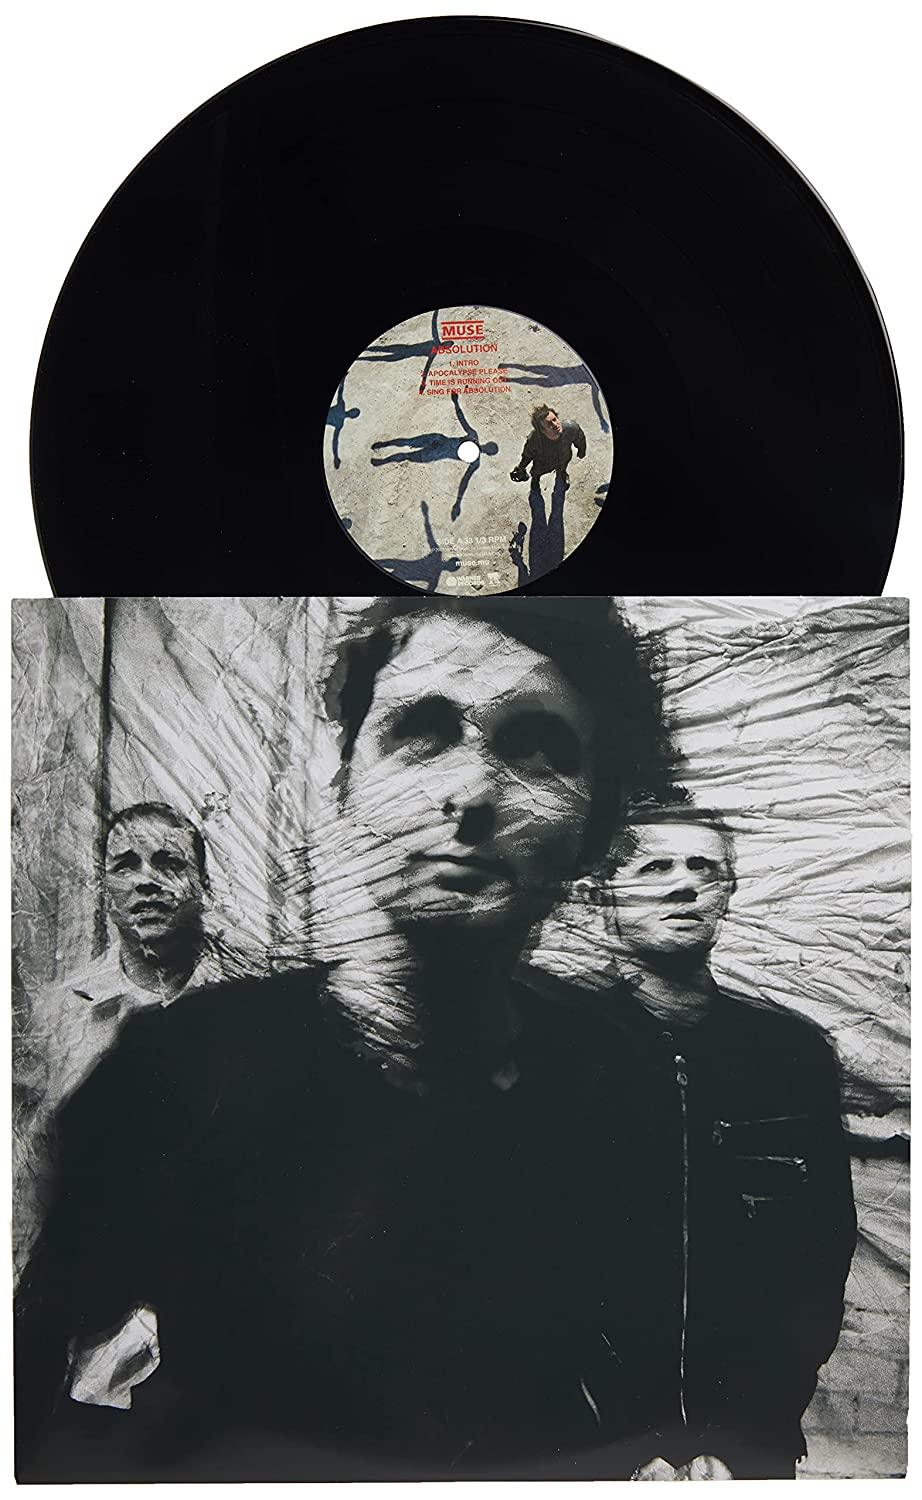 Muse - Resistance - Vinyl